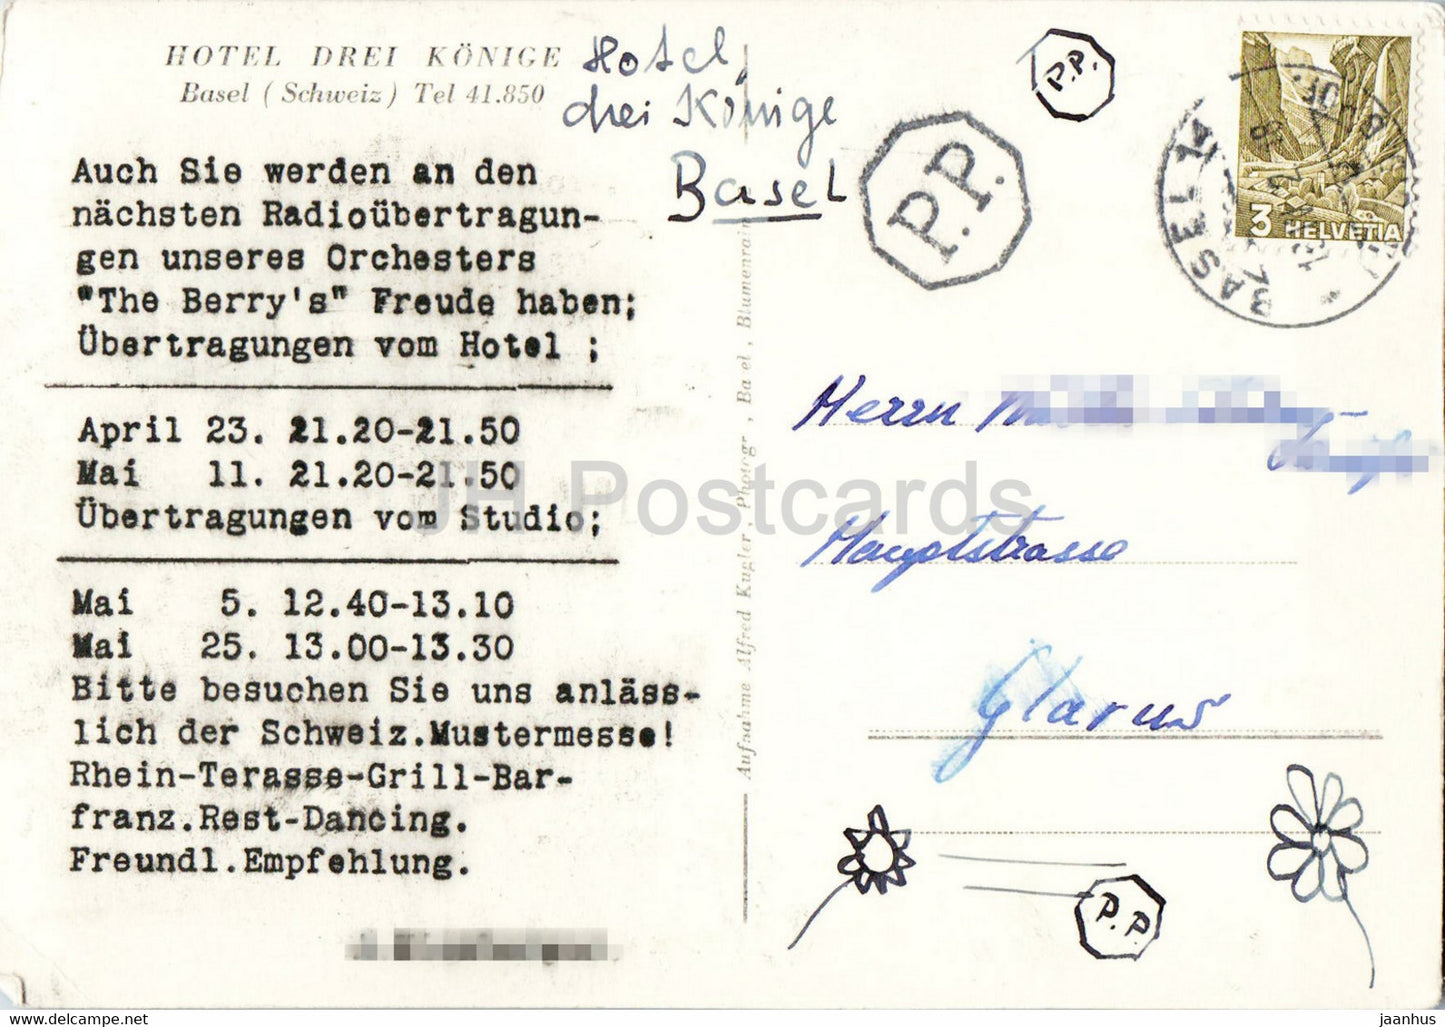 Basel - Hotel Drei Konige - bridge - 547 - old postcard - Switzerland - used